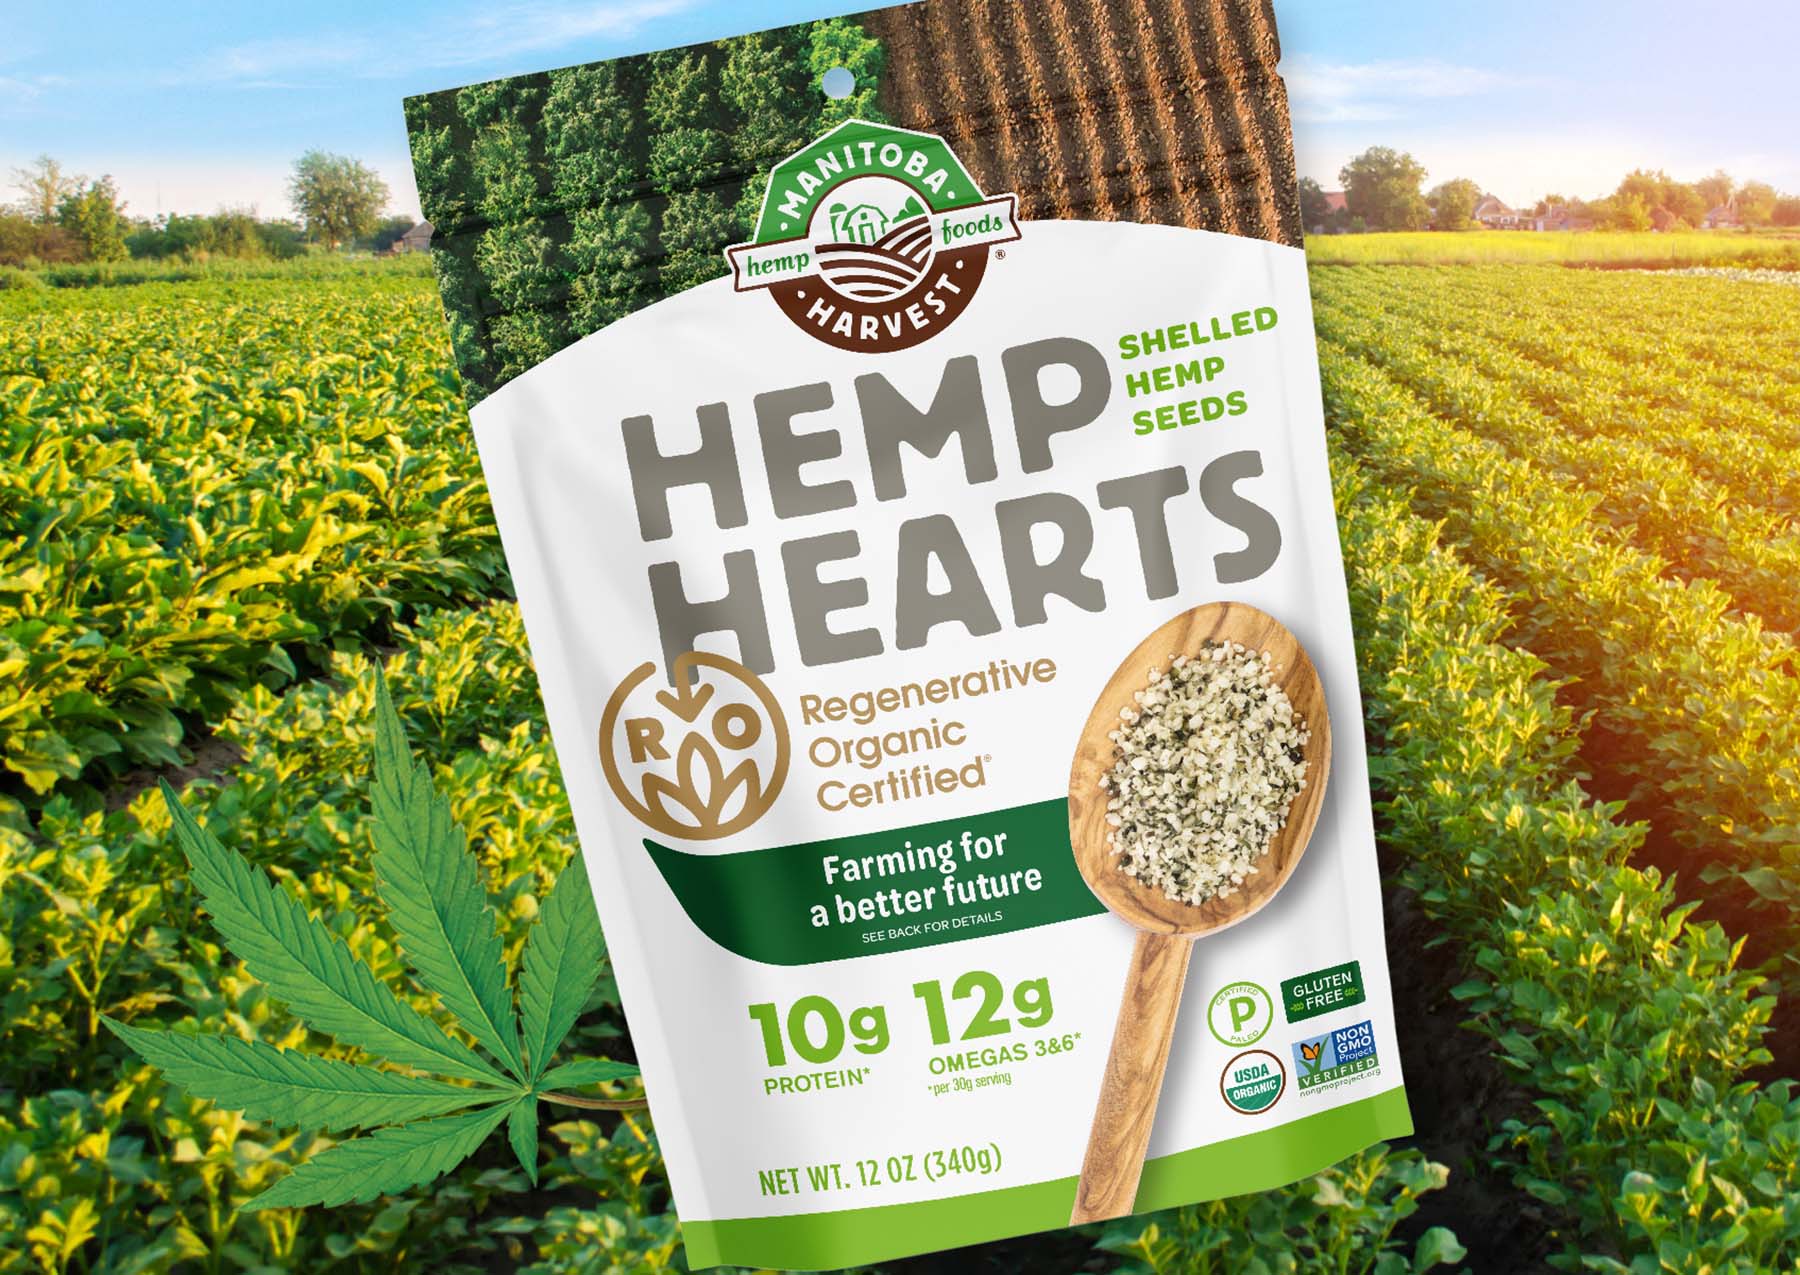 Manitoba Harvest Regenerative Hemp Hearts package